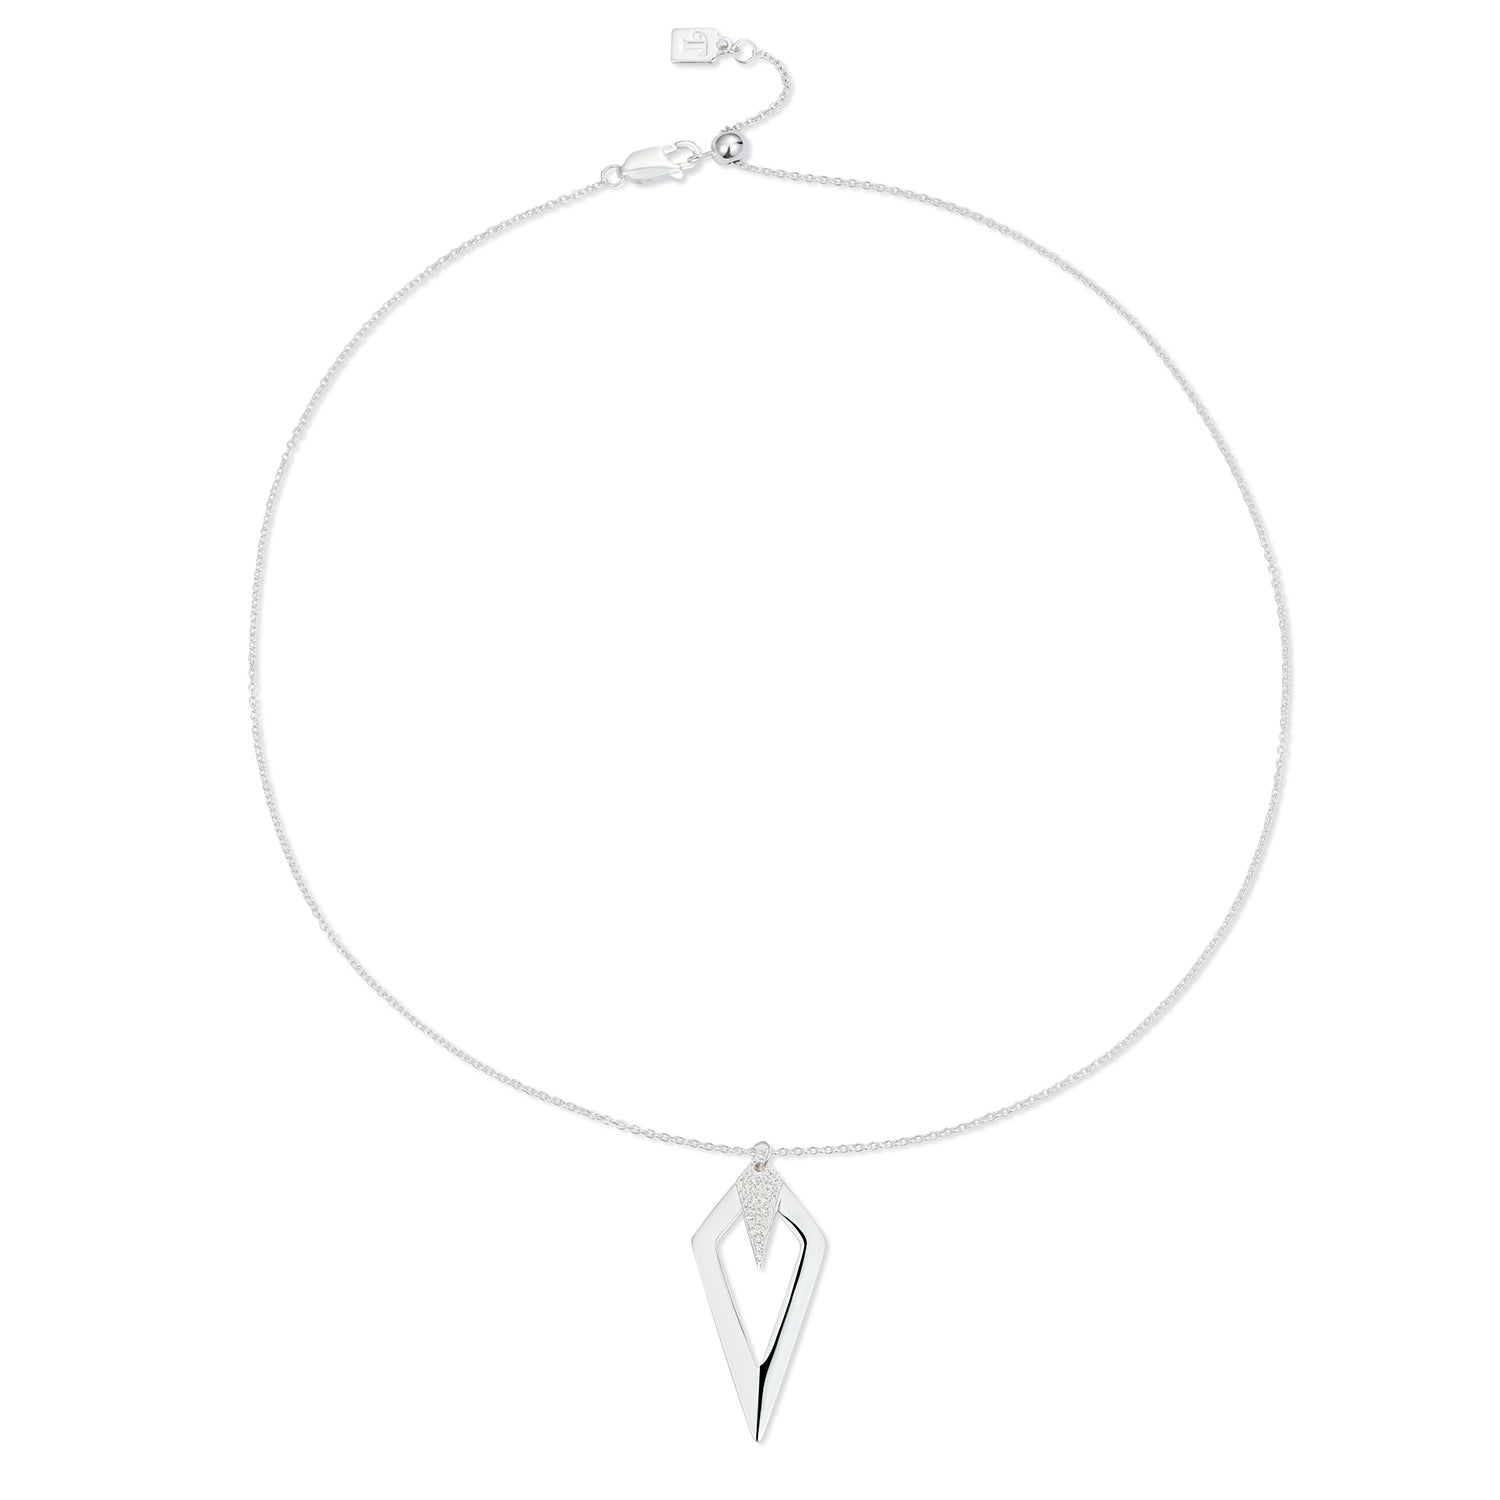 Arrowhead Pendant Necklace - Sterling Silver